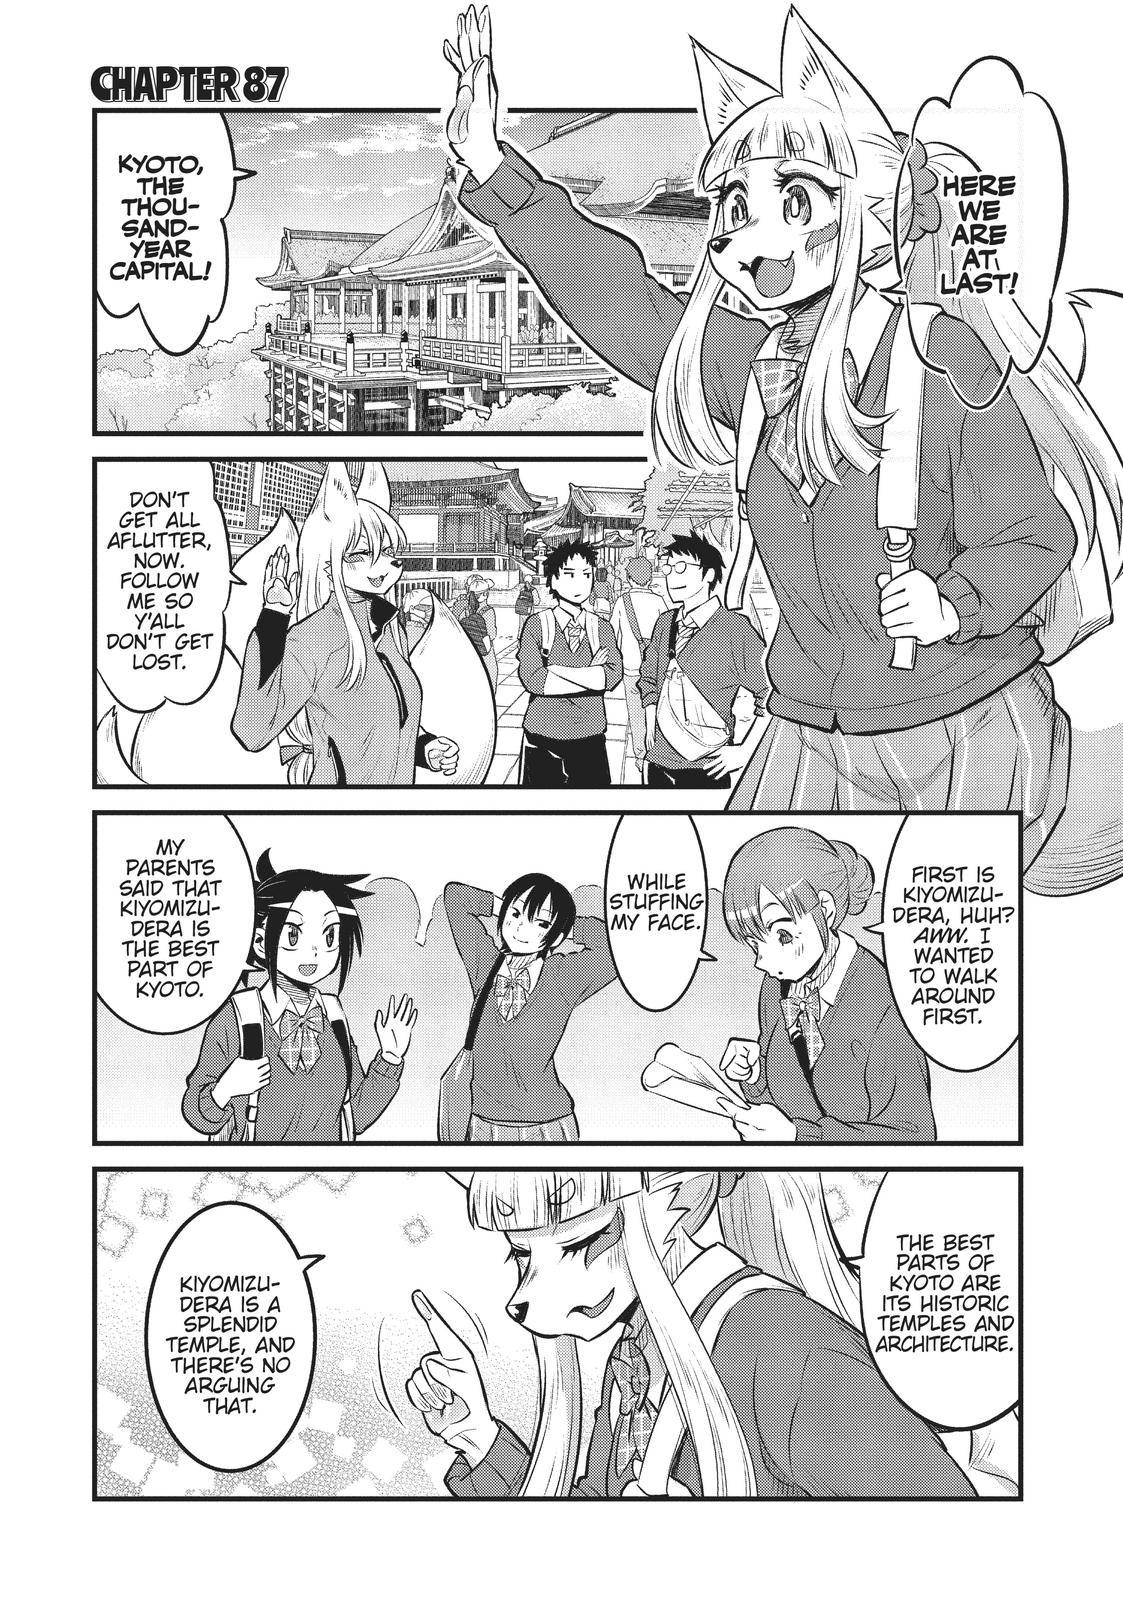 Tamamo-chan's a Fox! - chapter 87 - #1